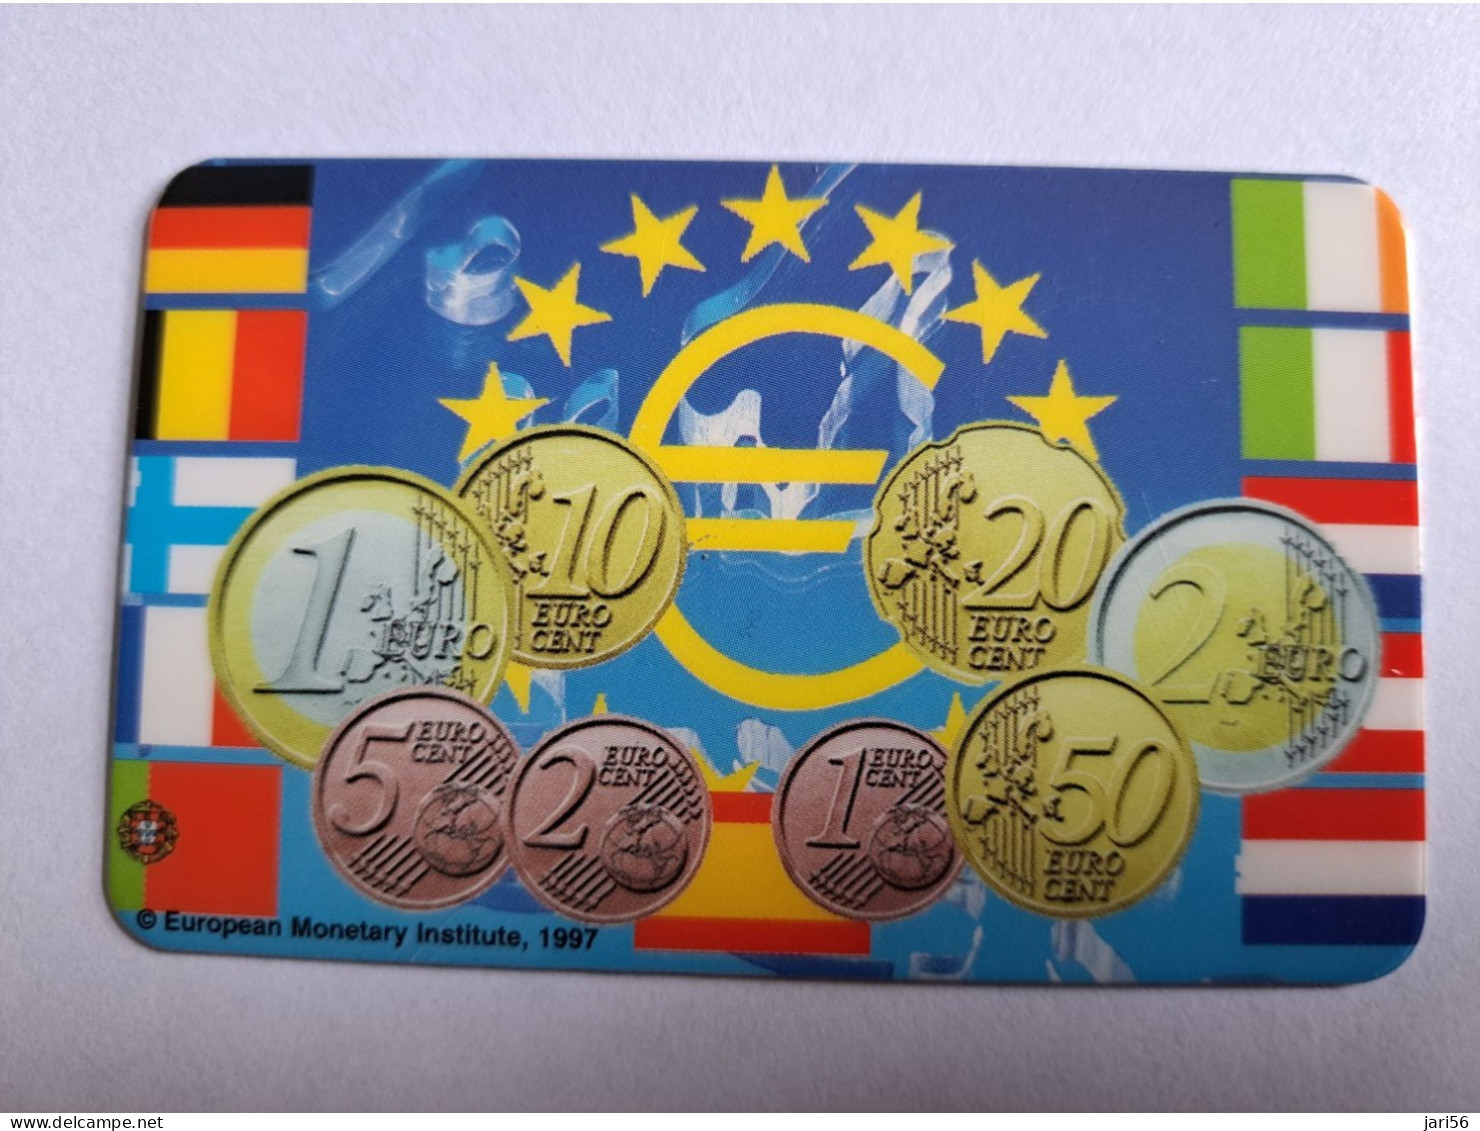 GREAT BRITAIN   20 UNITS   / EURO COINS/ EUROPE /FRONT / PHONECARD   (date 01/  00 )  PREPAID CARD / MINT      **12915** - [10] Sammlungen